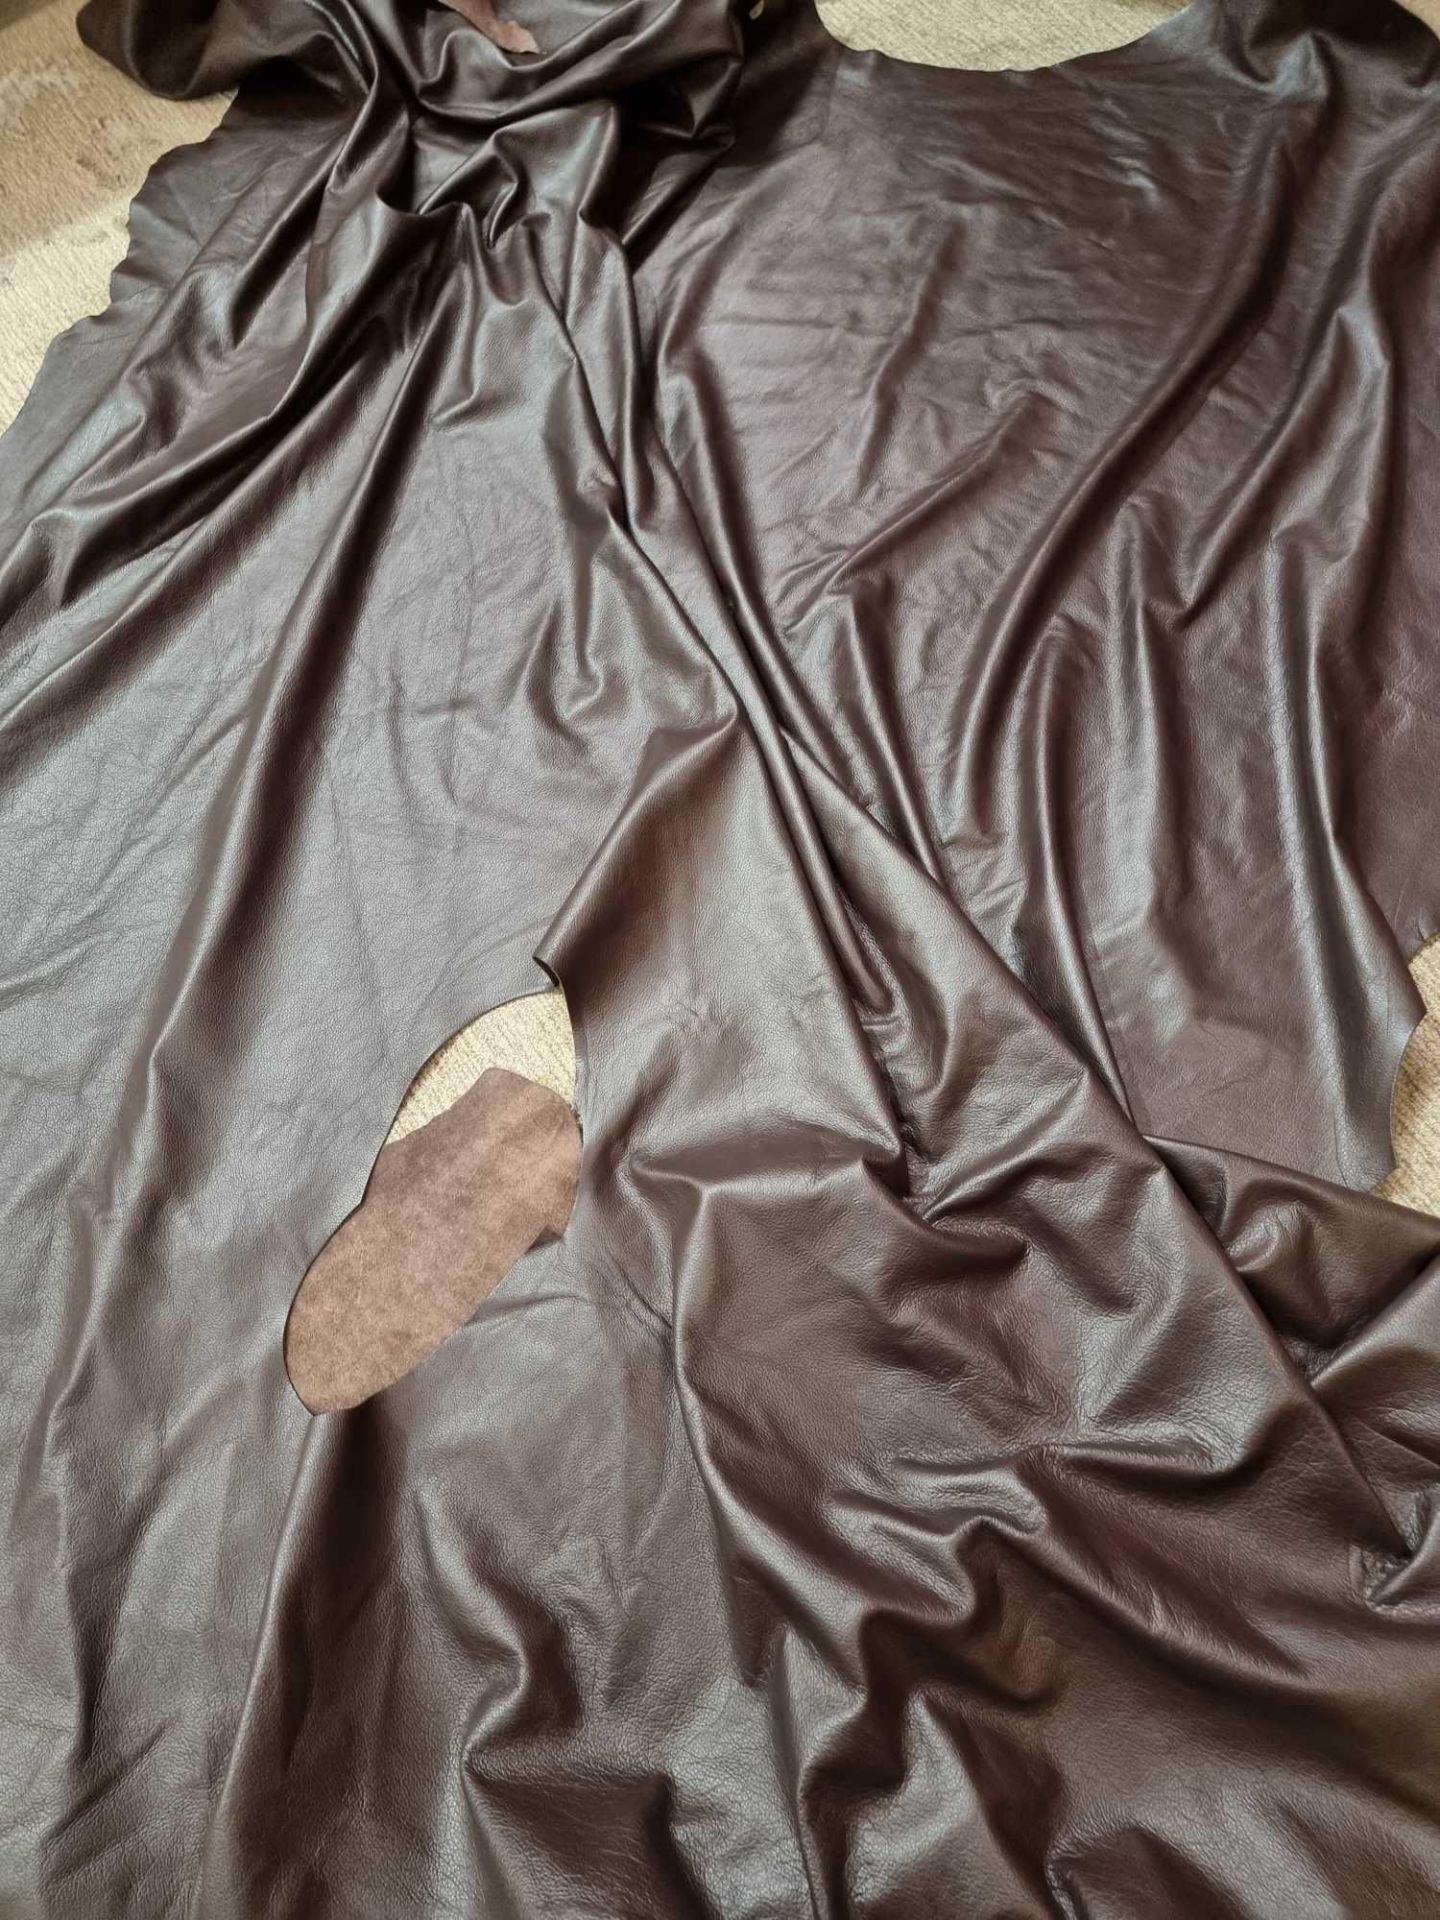 Mastrotto Hudson Chocolate Leather Hide approximately 3 91M2 2 3 x 1 7cm ( Hide No,122) - Bild 2 aus 2